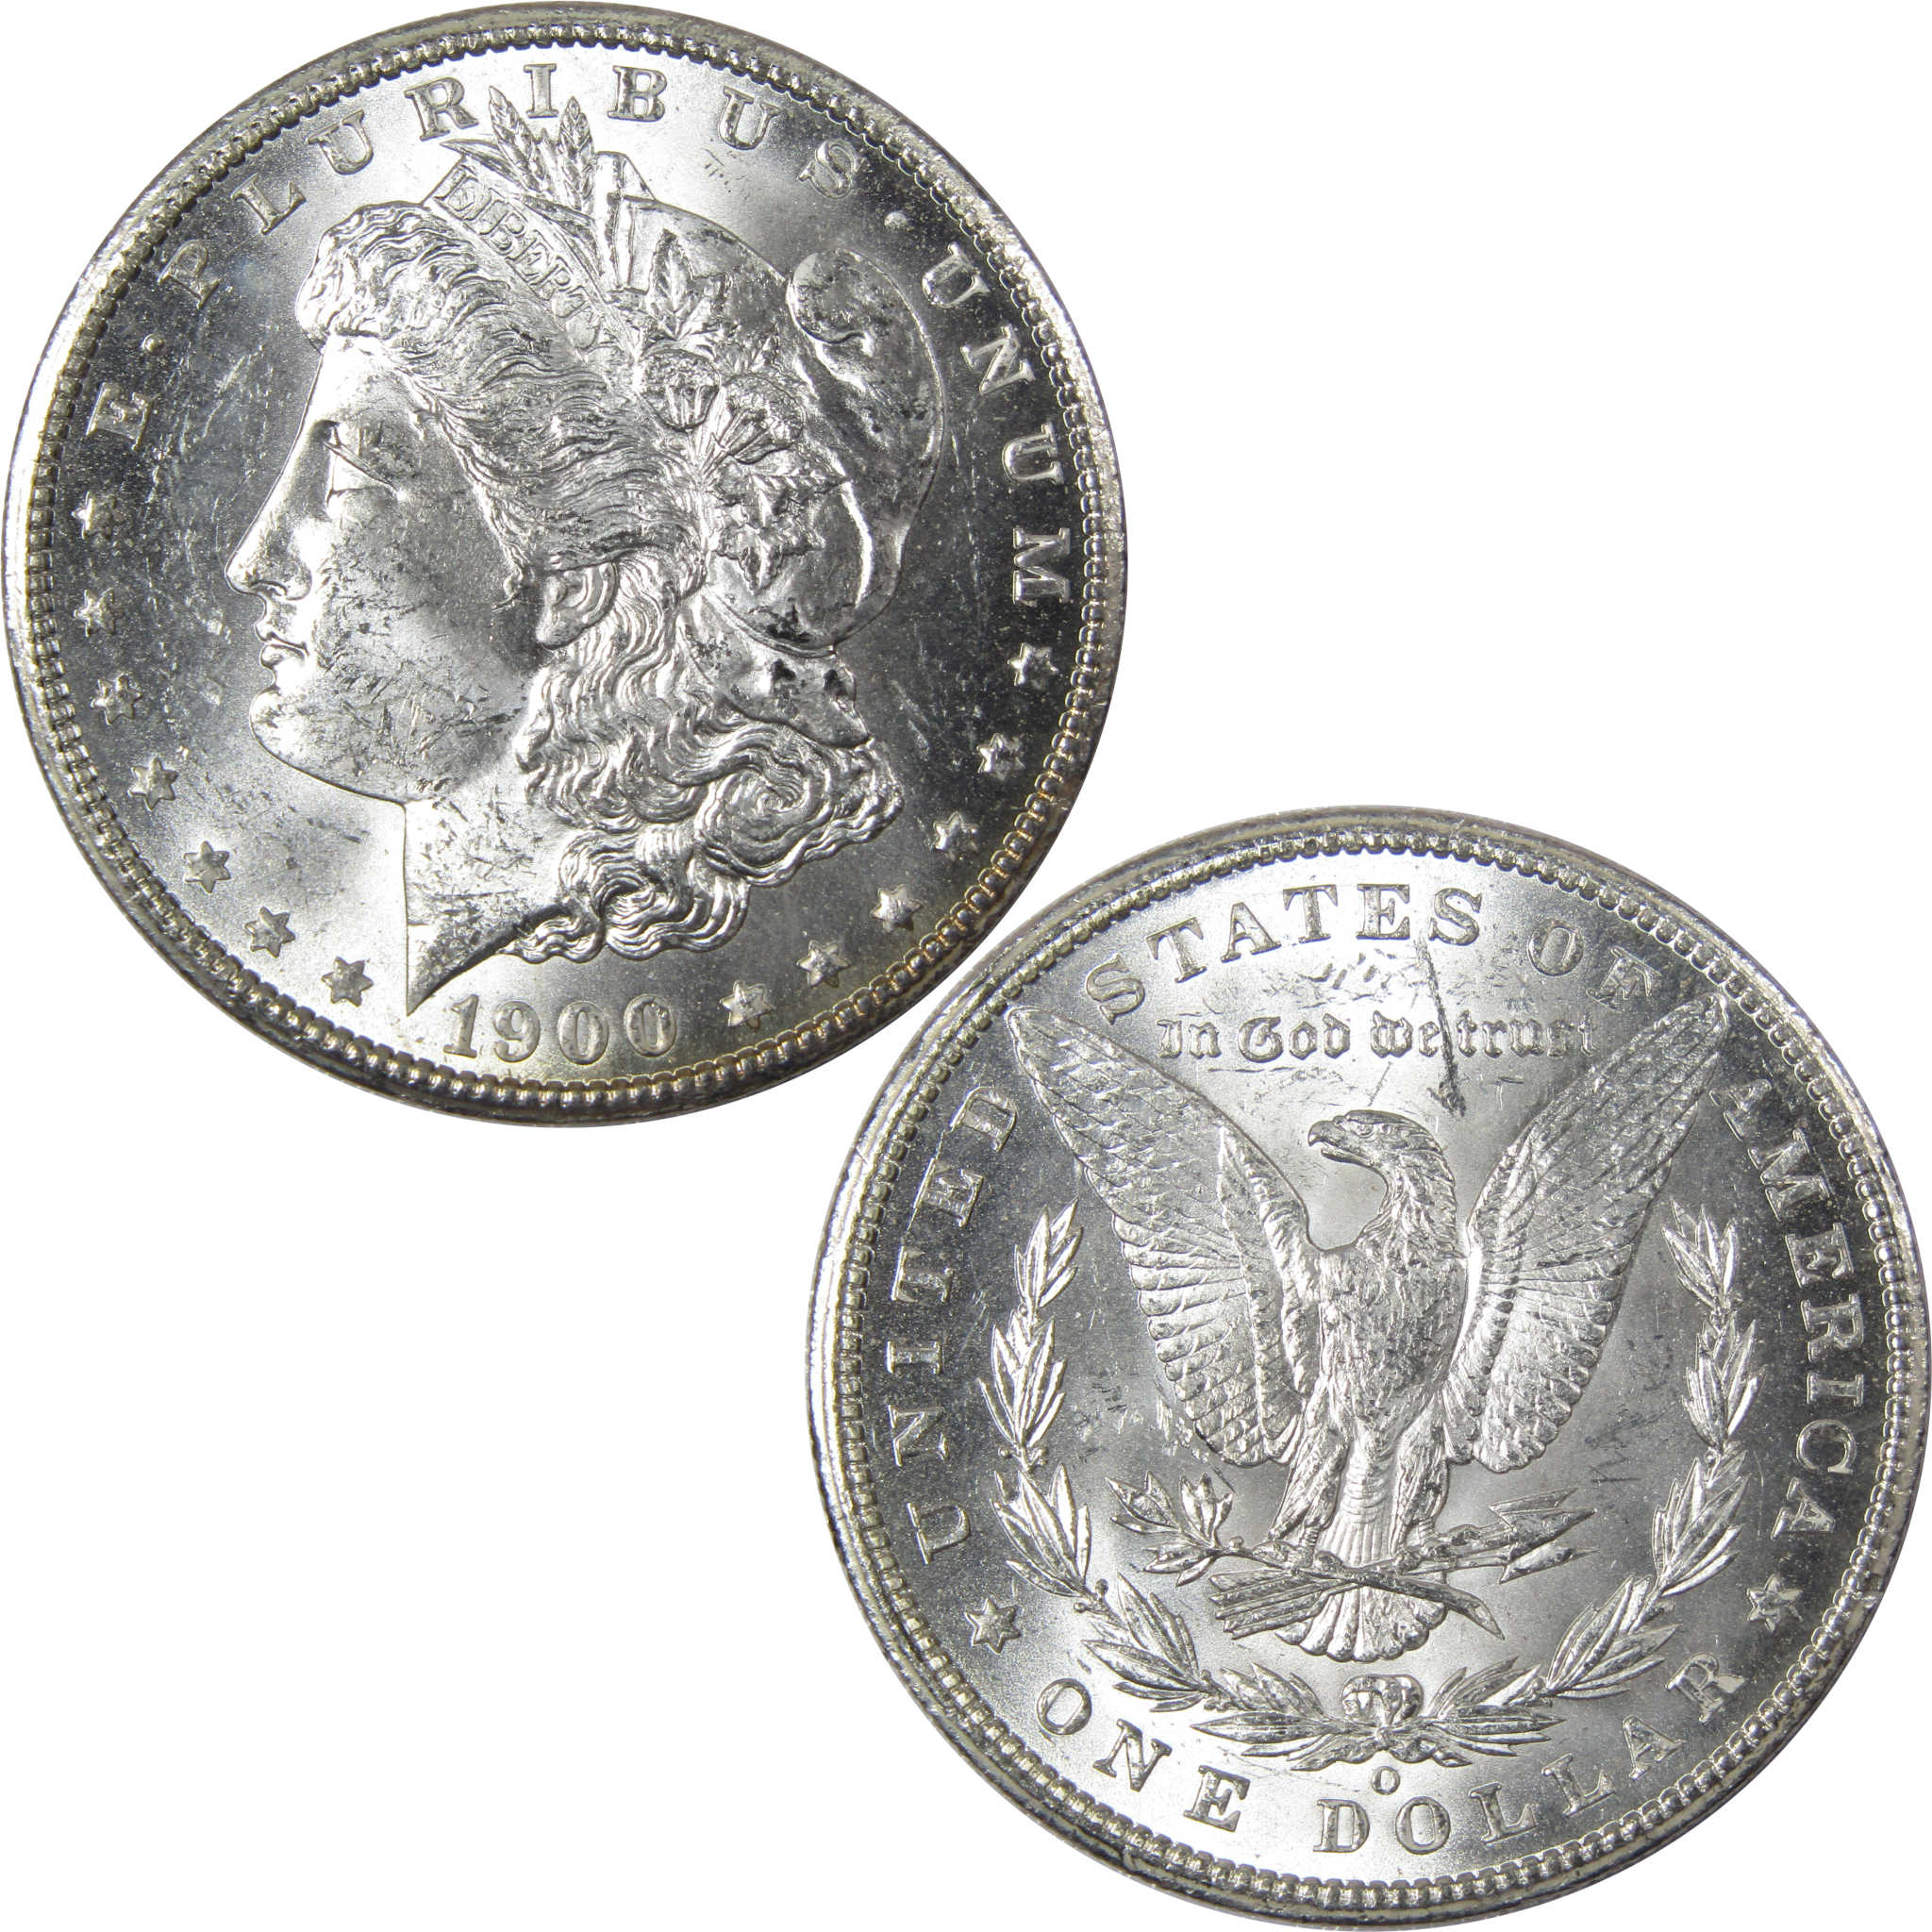 1900 O Morgan Dollar BU Uncirculated Mint State 90% Silver SKU:IPC9730 - Morgan coin - Morgan silver dollar - Morgan silver dollar for sale - Profile Coins &amp; Collectibles